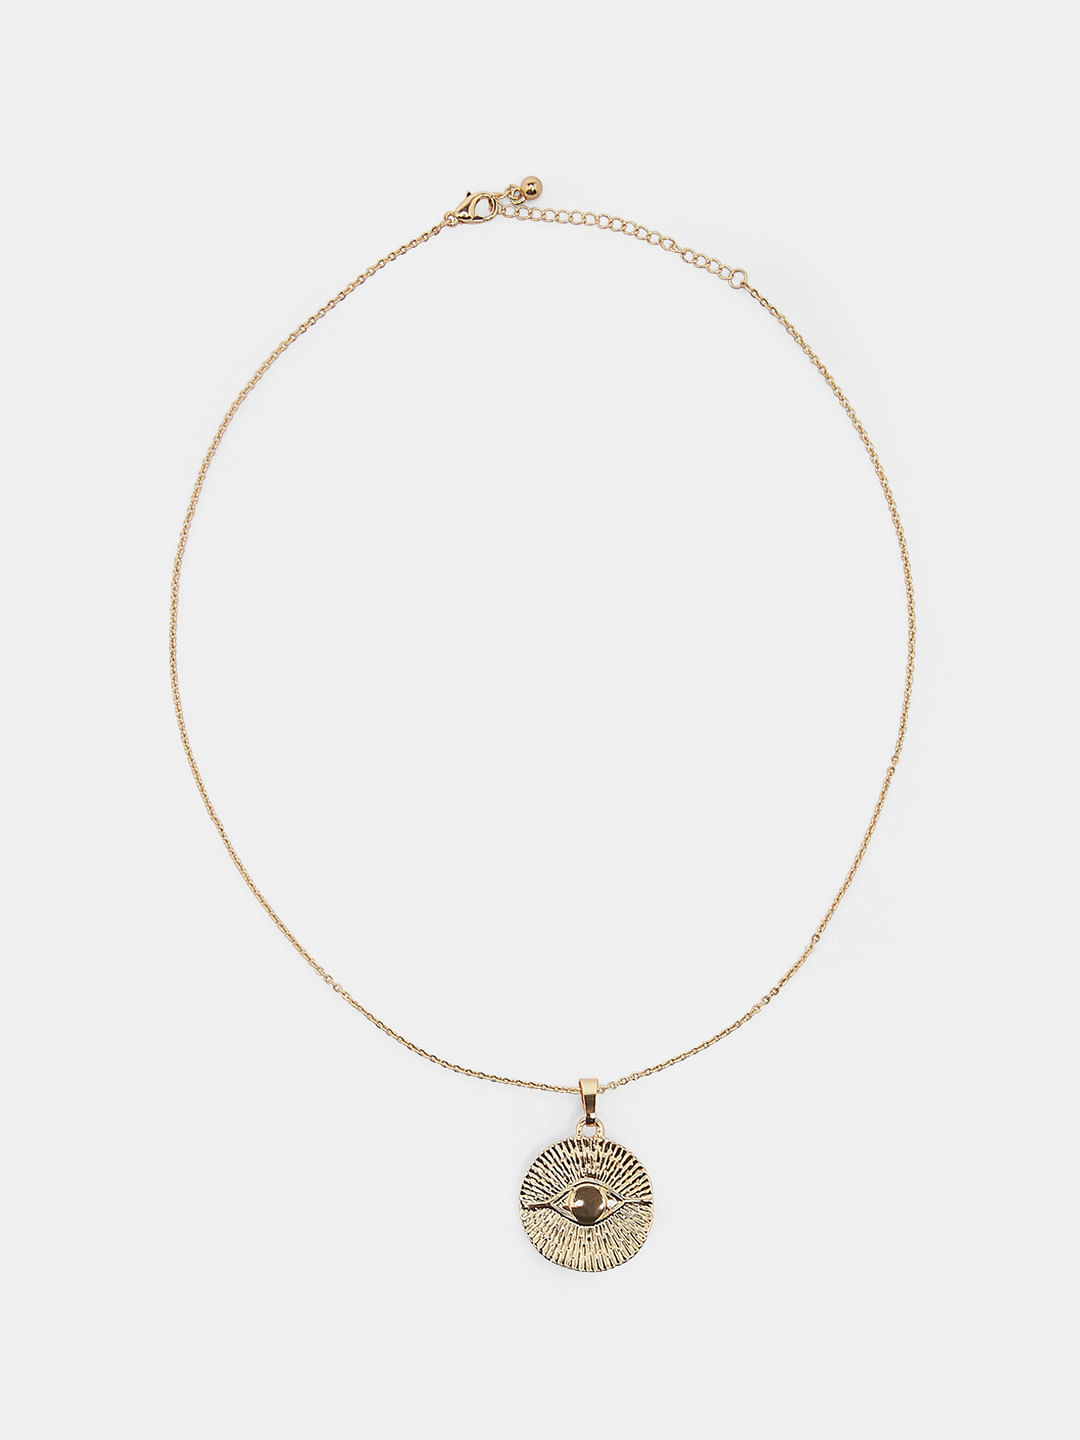 Yaniv Fine Jewelry 18K Gold Evil Eye Pendant Necklace With Diamond Accent,  Jewish Jewelry | Judaica WebStore